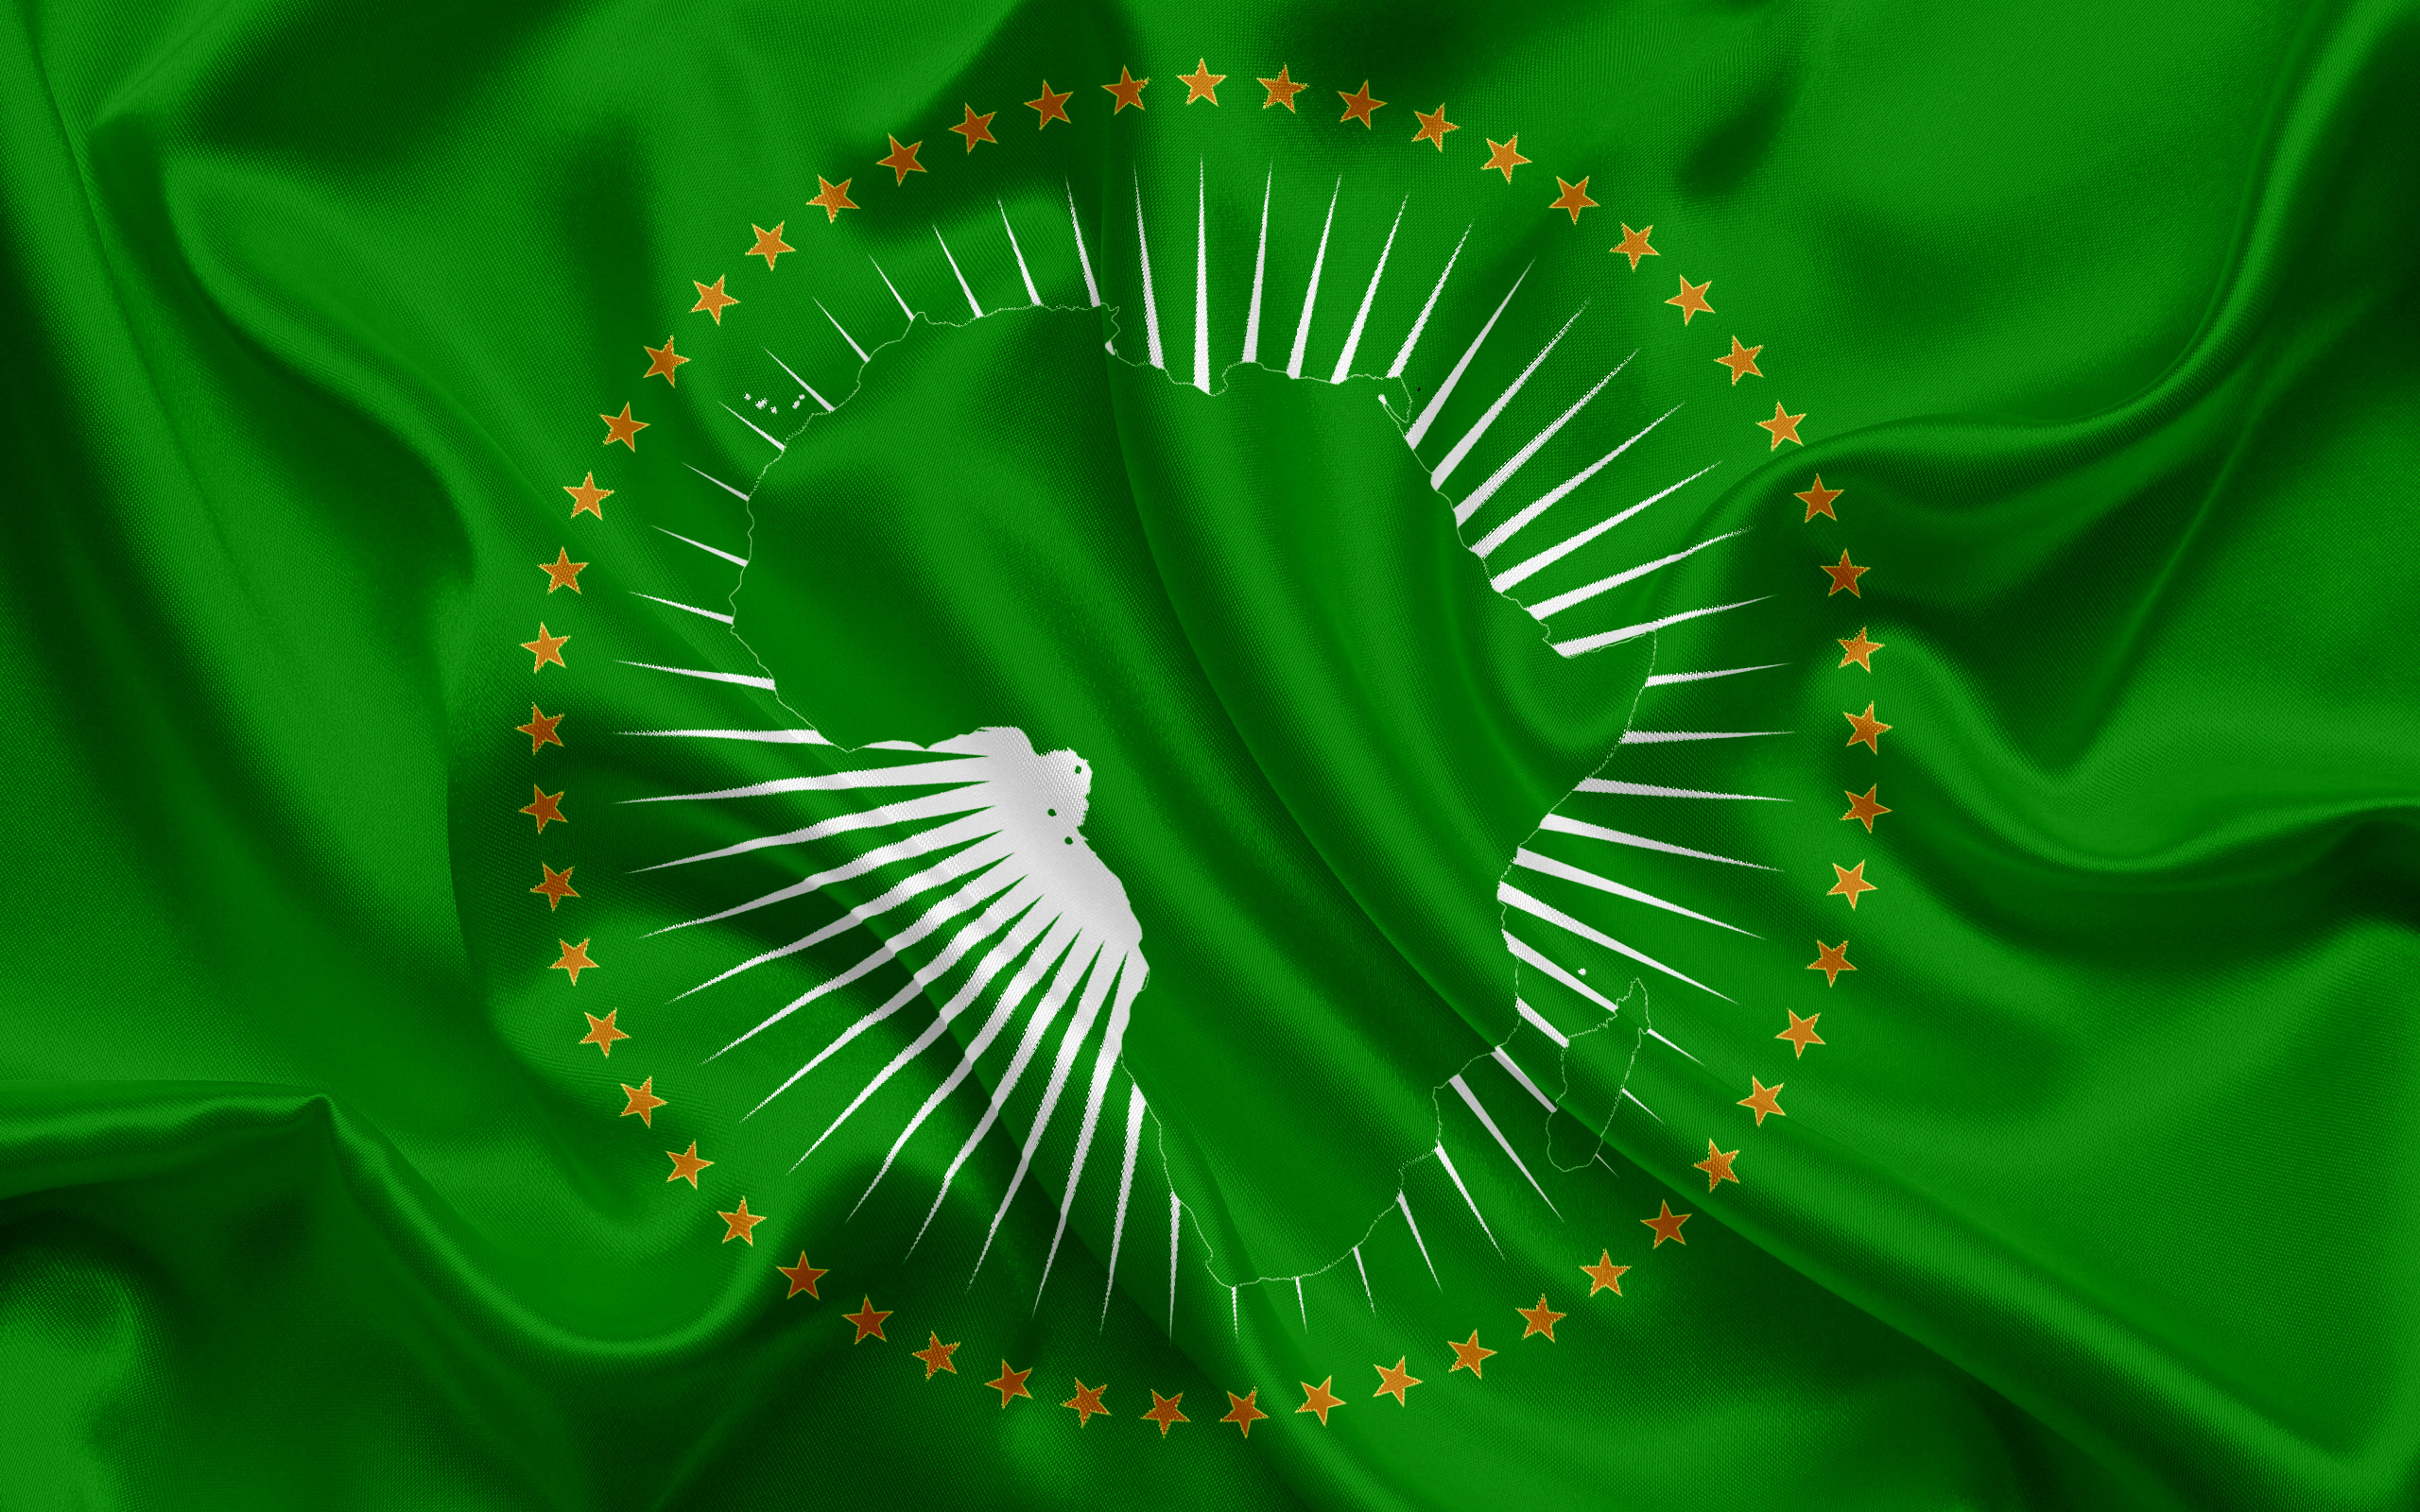 african union flag au emblem logo au symbols african union في الذكري ال ٦٠ لتأسيس منظمة الوحدة الإفريقية : الاتحاد الأفريقي يحتفل بيوم أفريقيا 